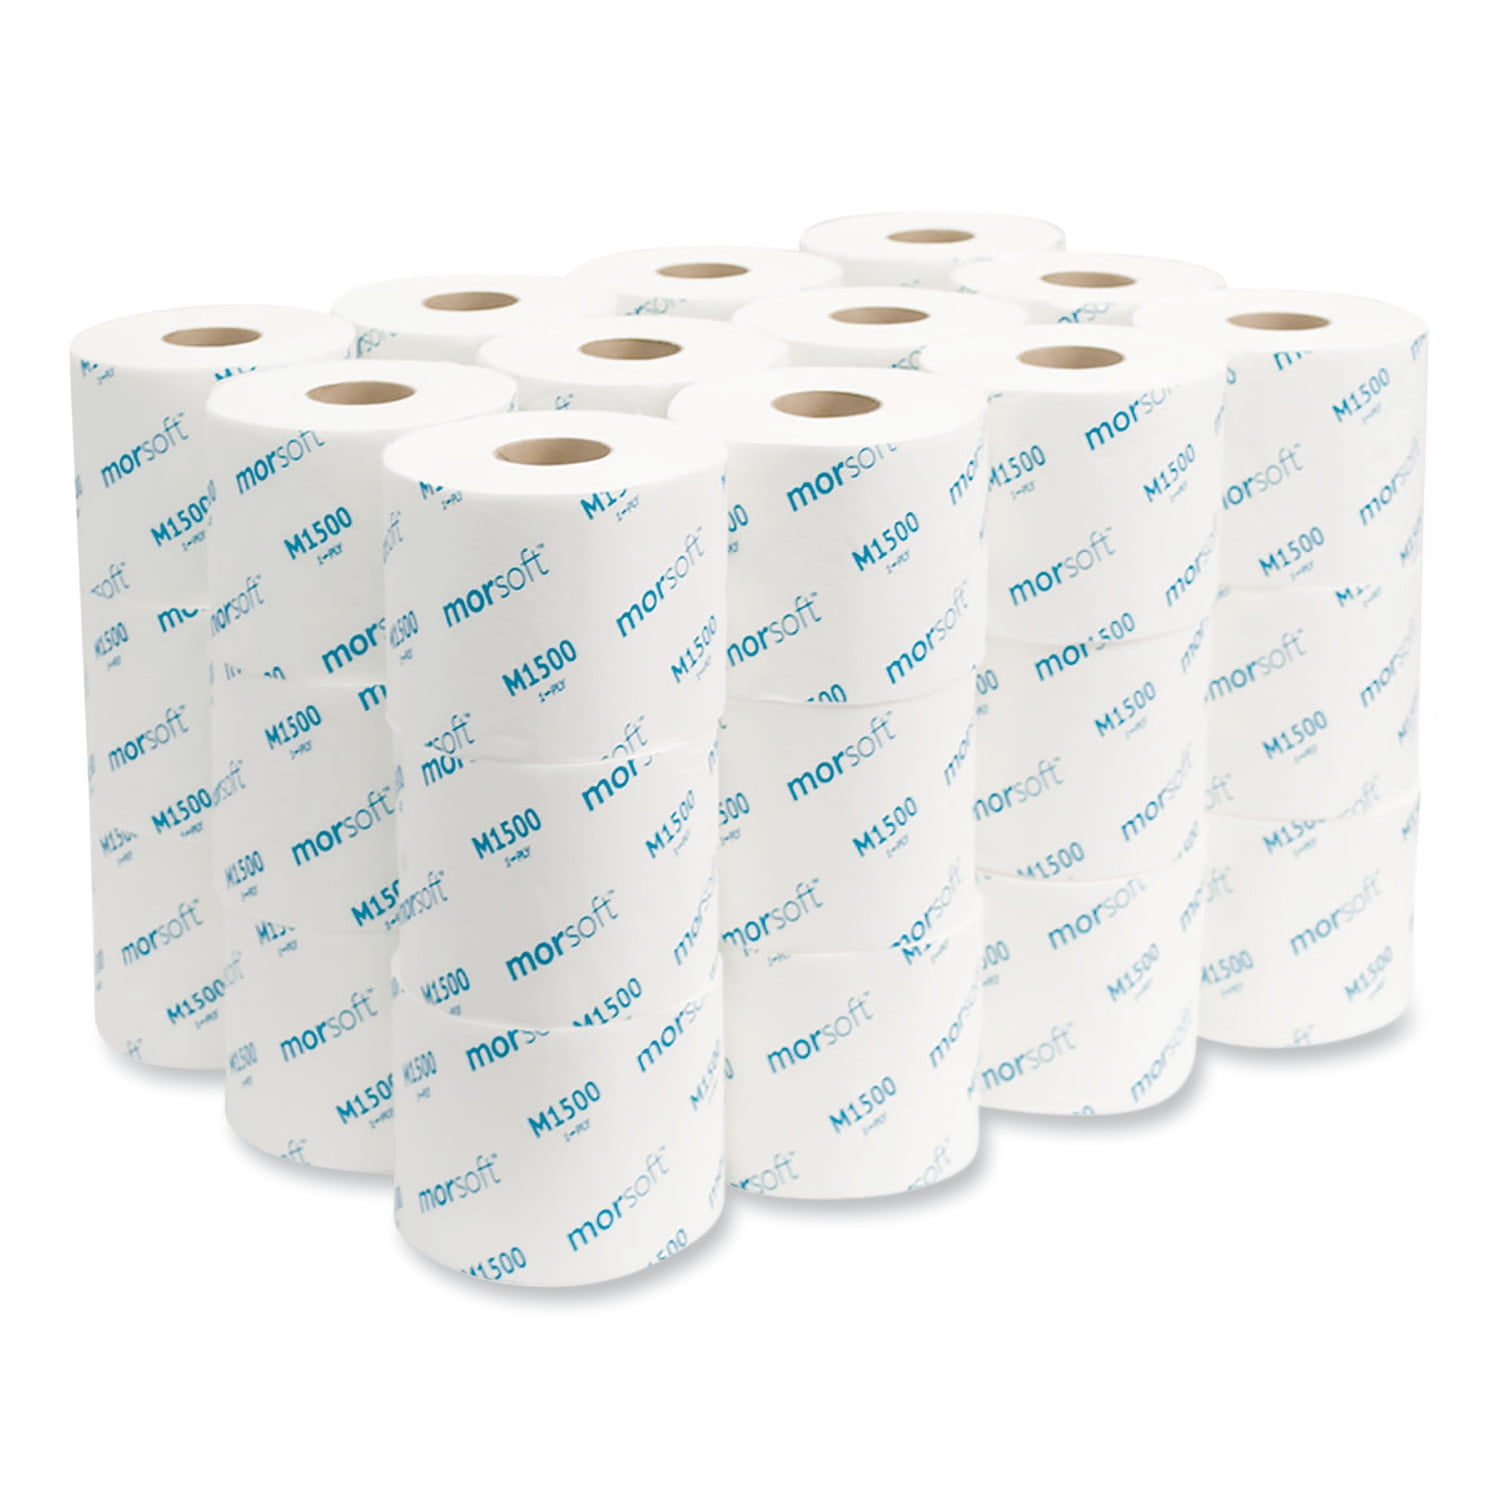 Morcon Tissue Morsoft Controlled Toilet Paper, Split-Core, Septic Safe ...